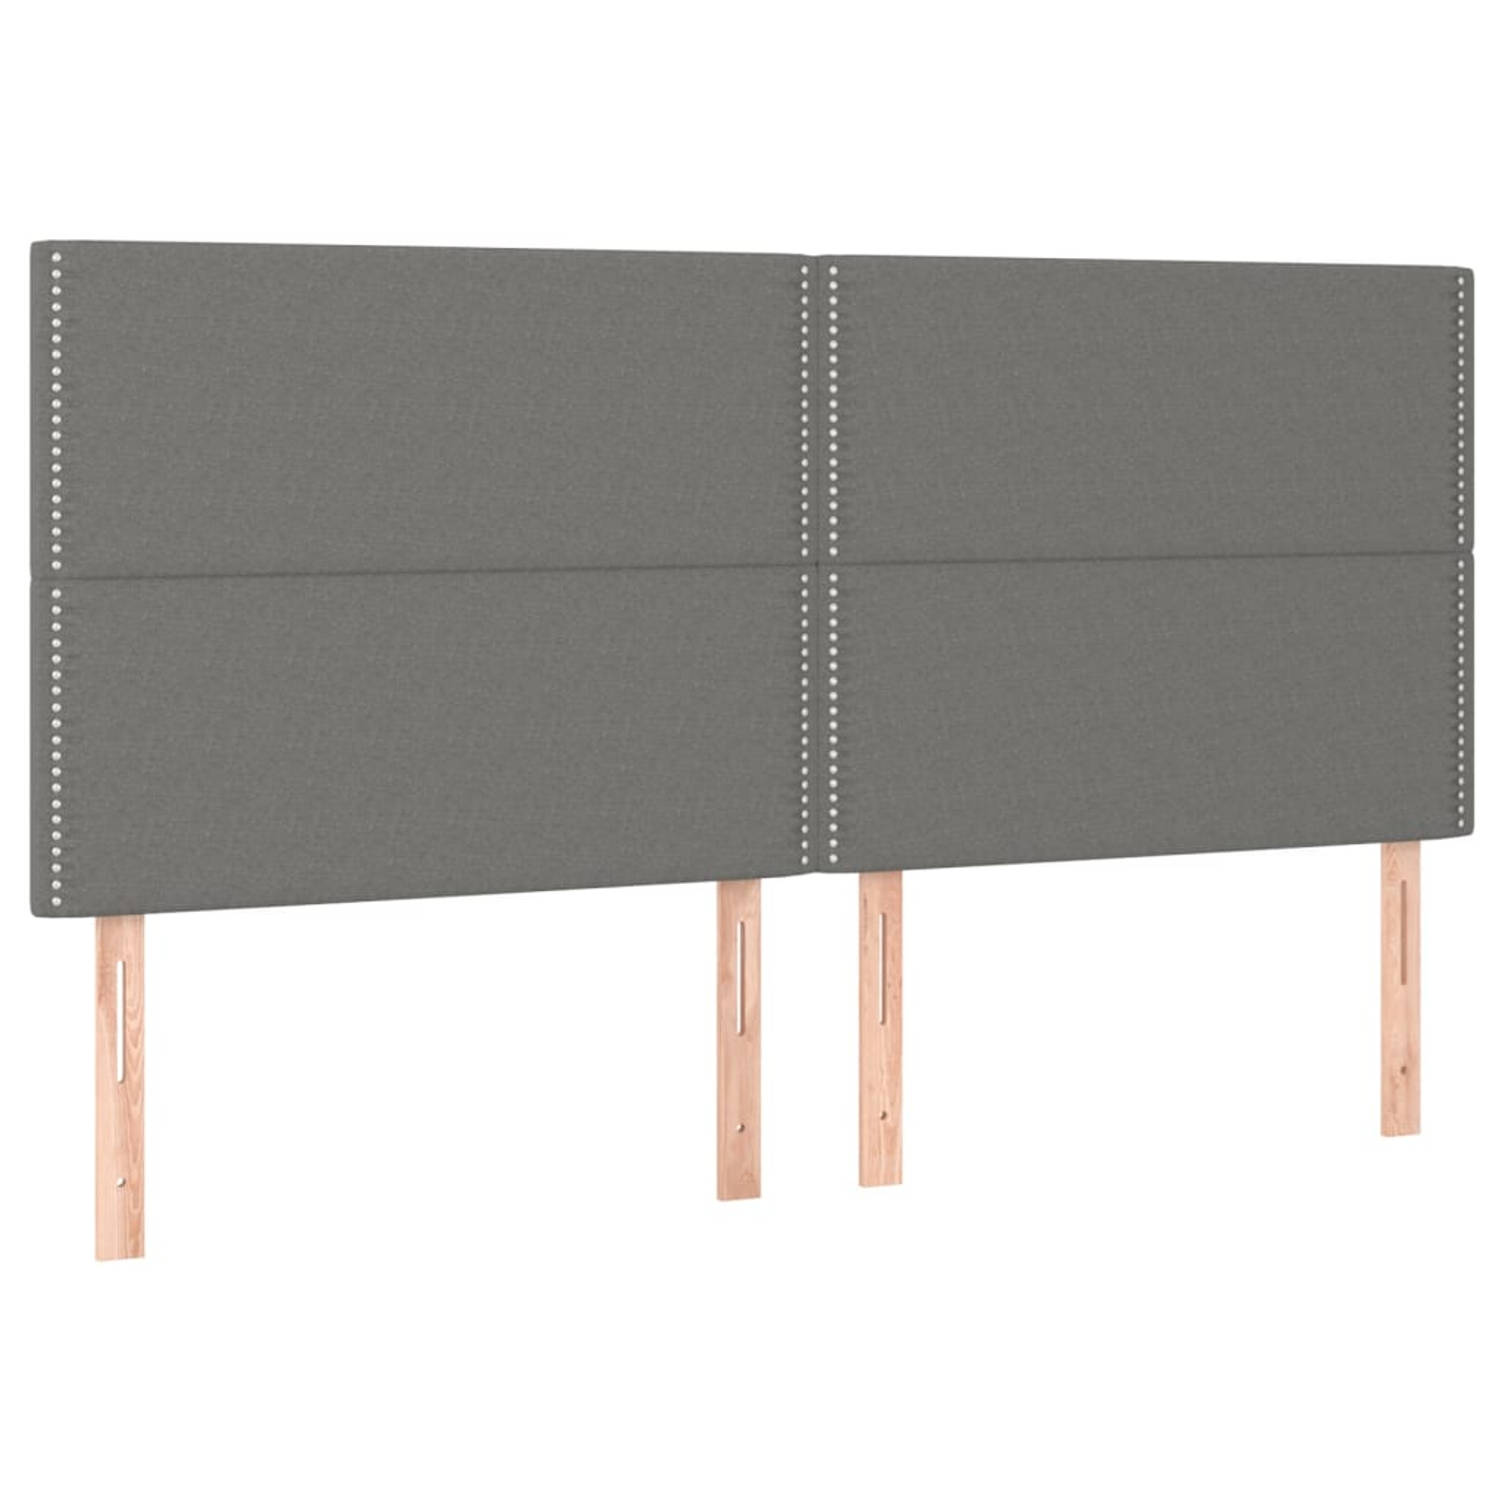 The Living Store Hoofdbord - Klassiek design - Duurzaam materiaal - Stevige poten - Verstelbare hoogte - Comfortabele ondersteuning - Elegant ontwerp - Kleur- donkergrijs - Materia